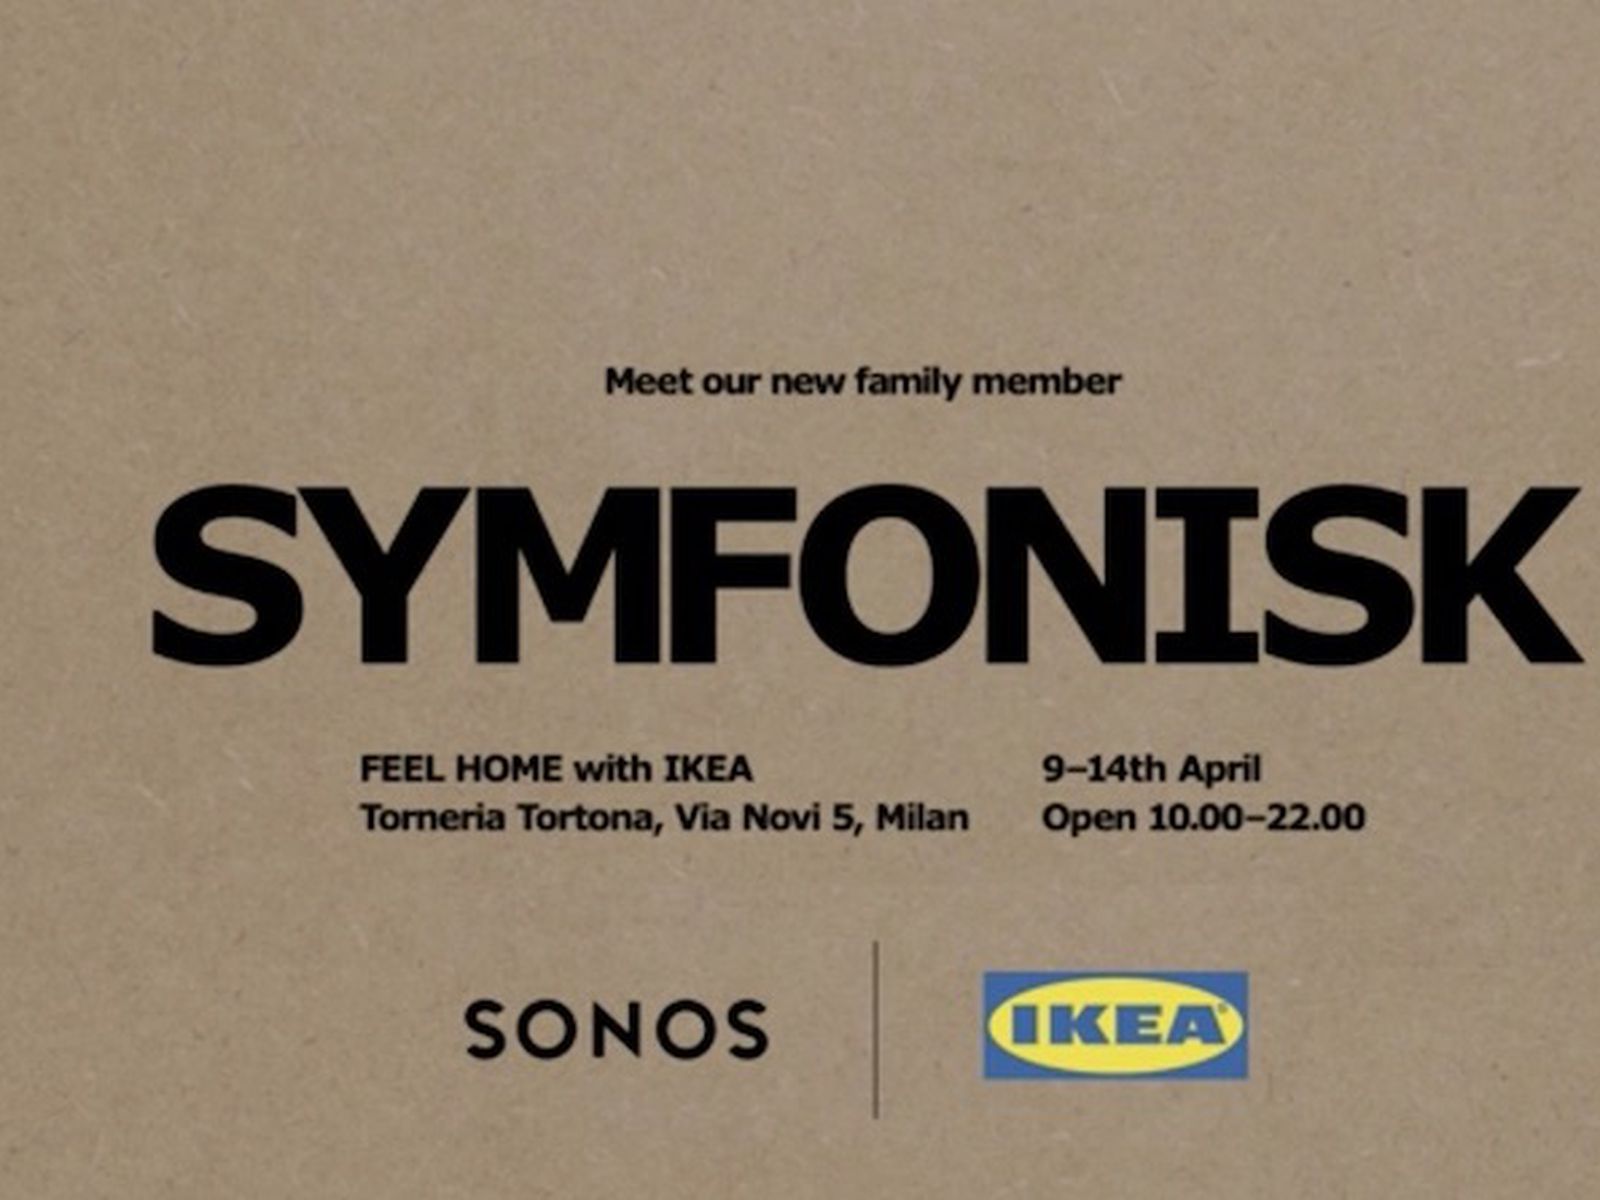 IKEA to Sonos of Speakers in April - MacRumors